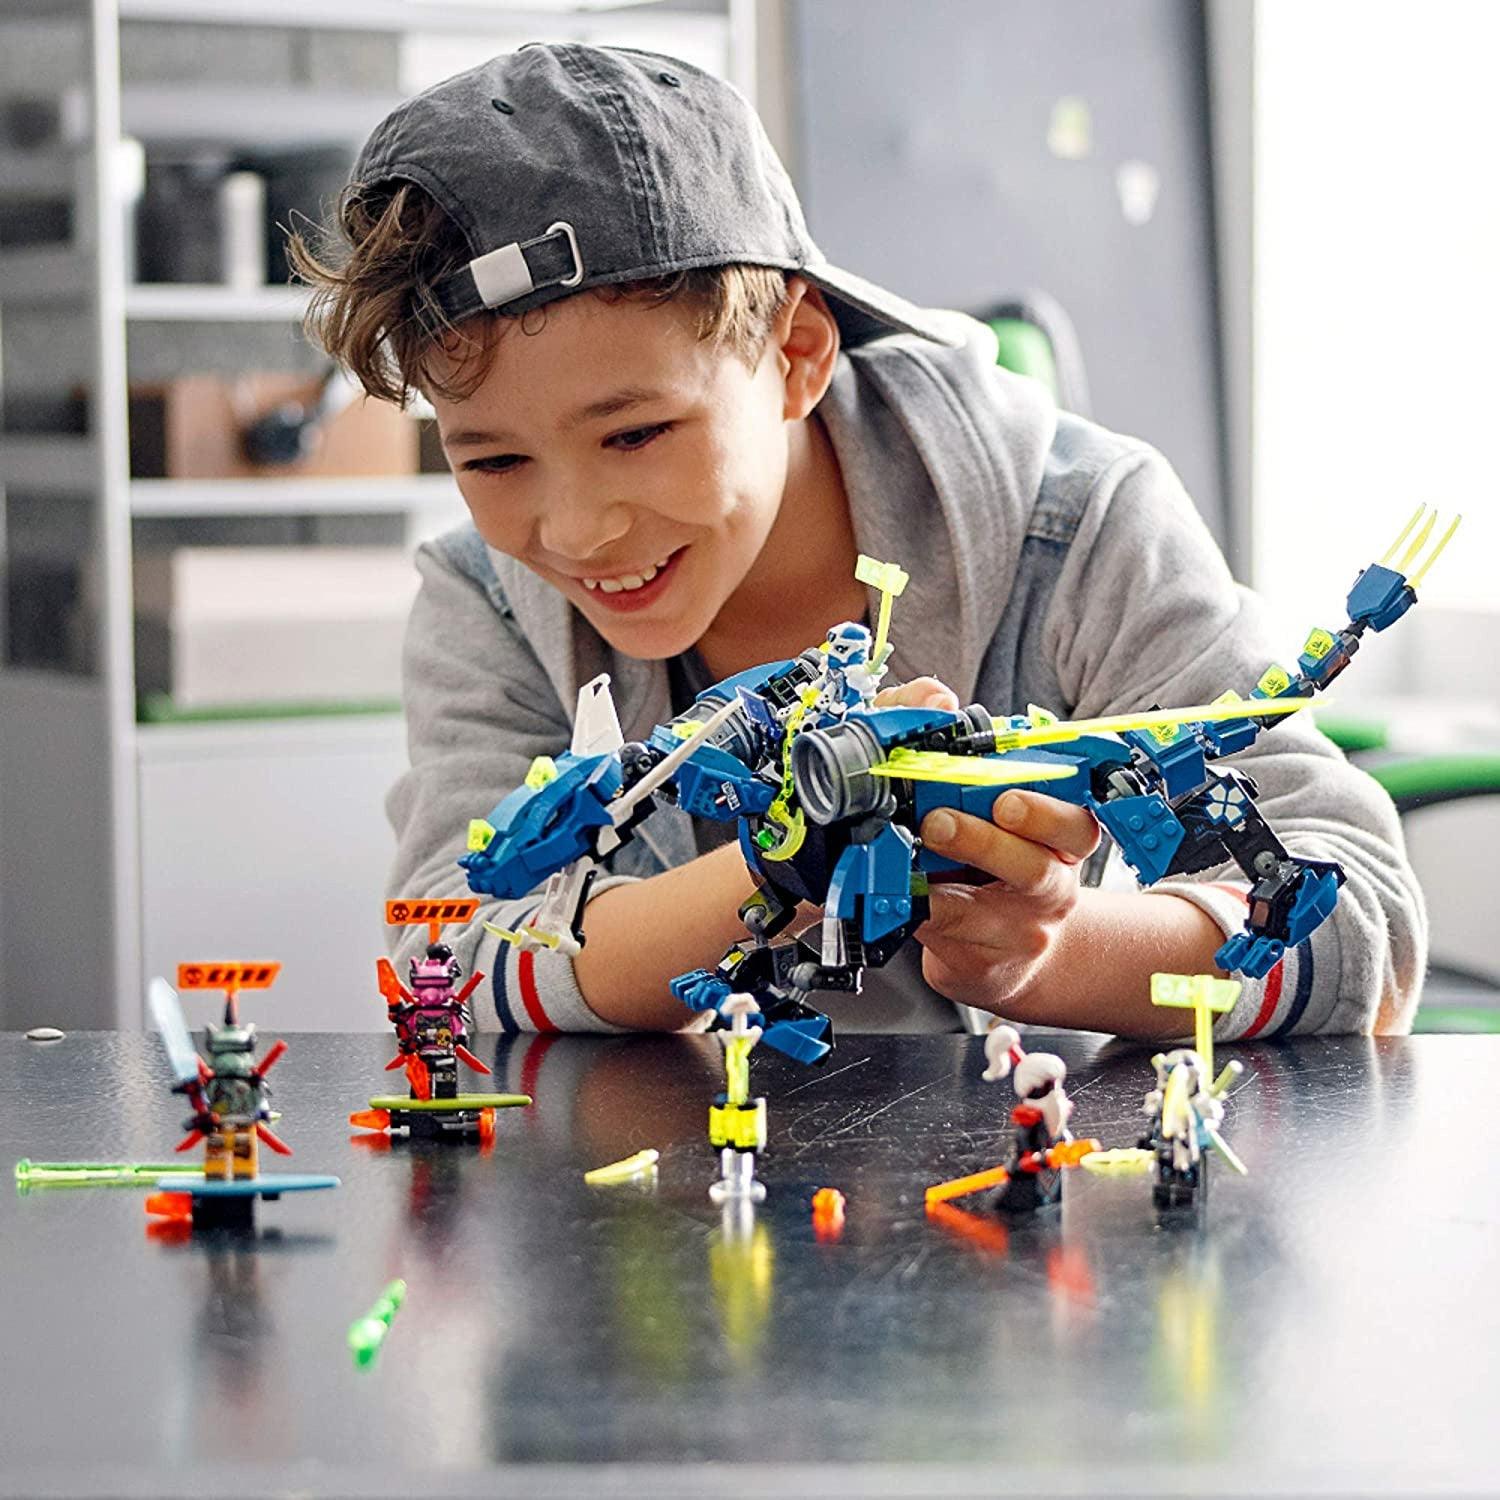 LEGO NINJAGO Jay’s Cyber Dragon 71711 Ninja Action Toy Building Kit (518 Pieces) (Retired Model) - BumbleToys - 8+ Years, 8-13 Years, Boys, LEGO, Ninjago, OXE, Pre-Order